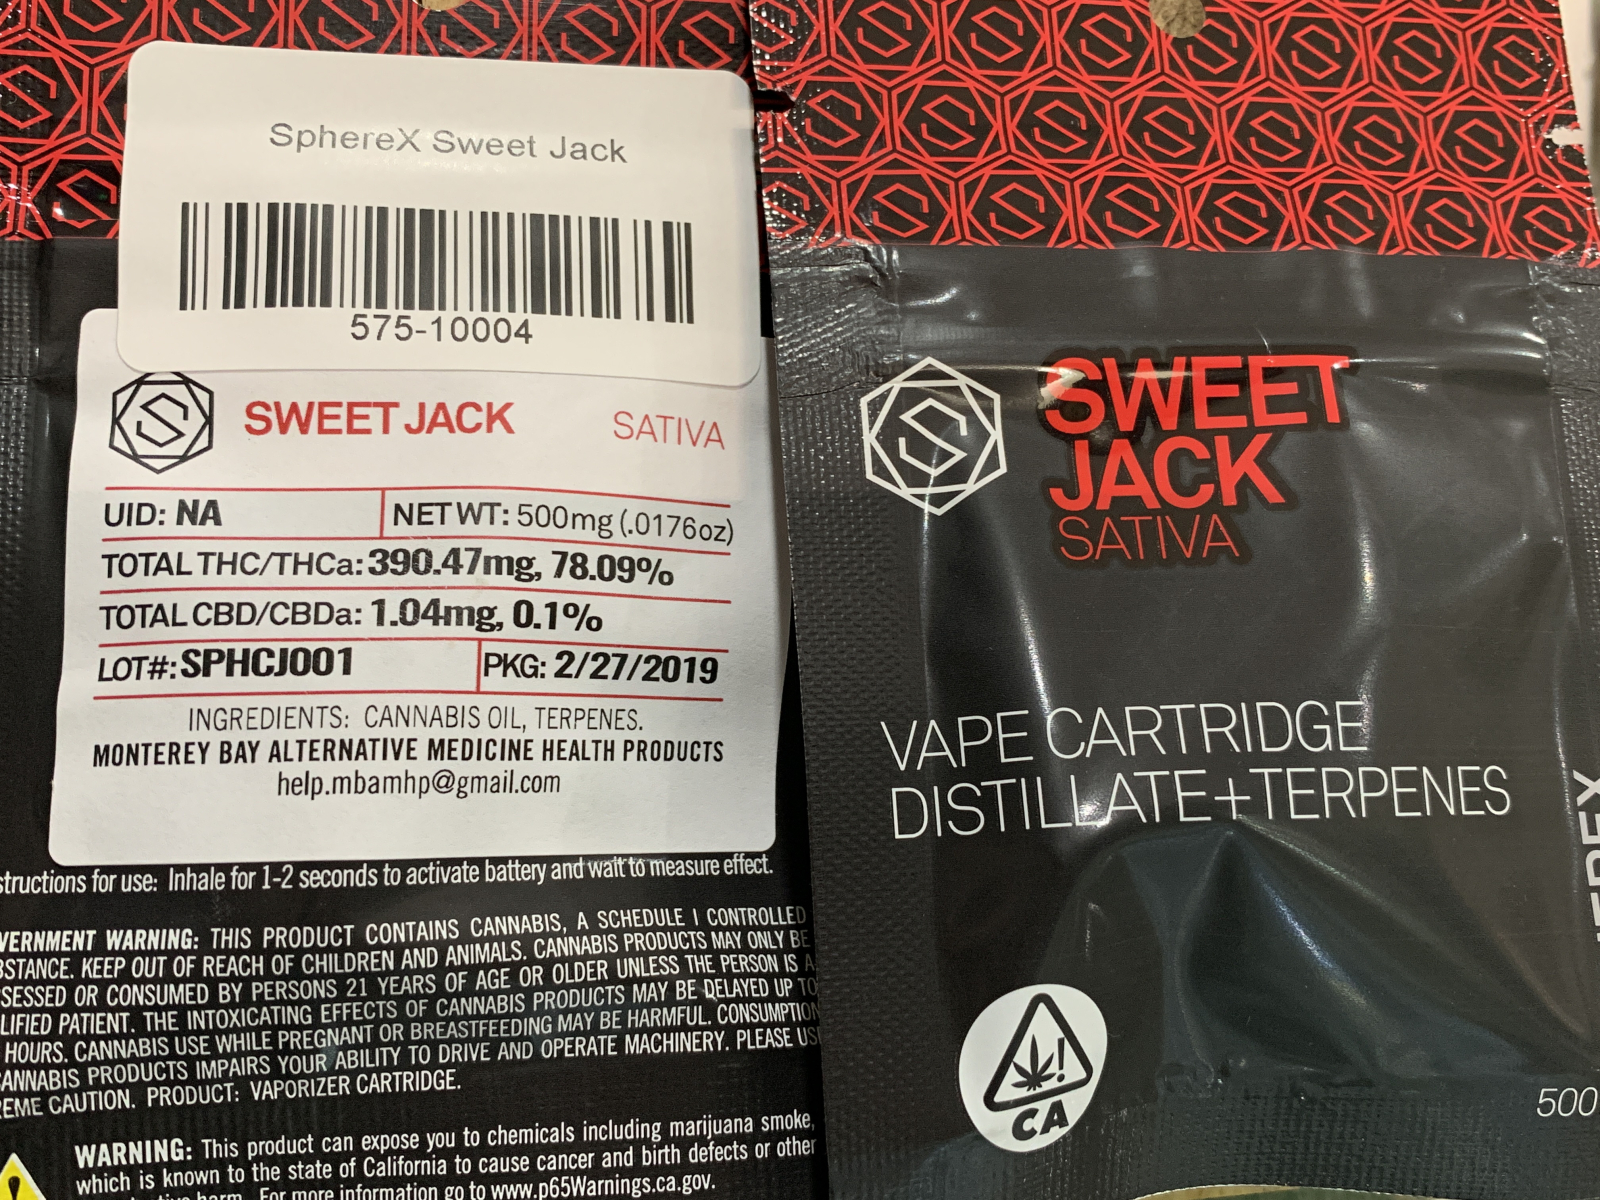 Spherex sweet jack vape cartridge